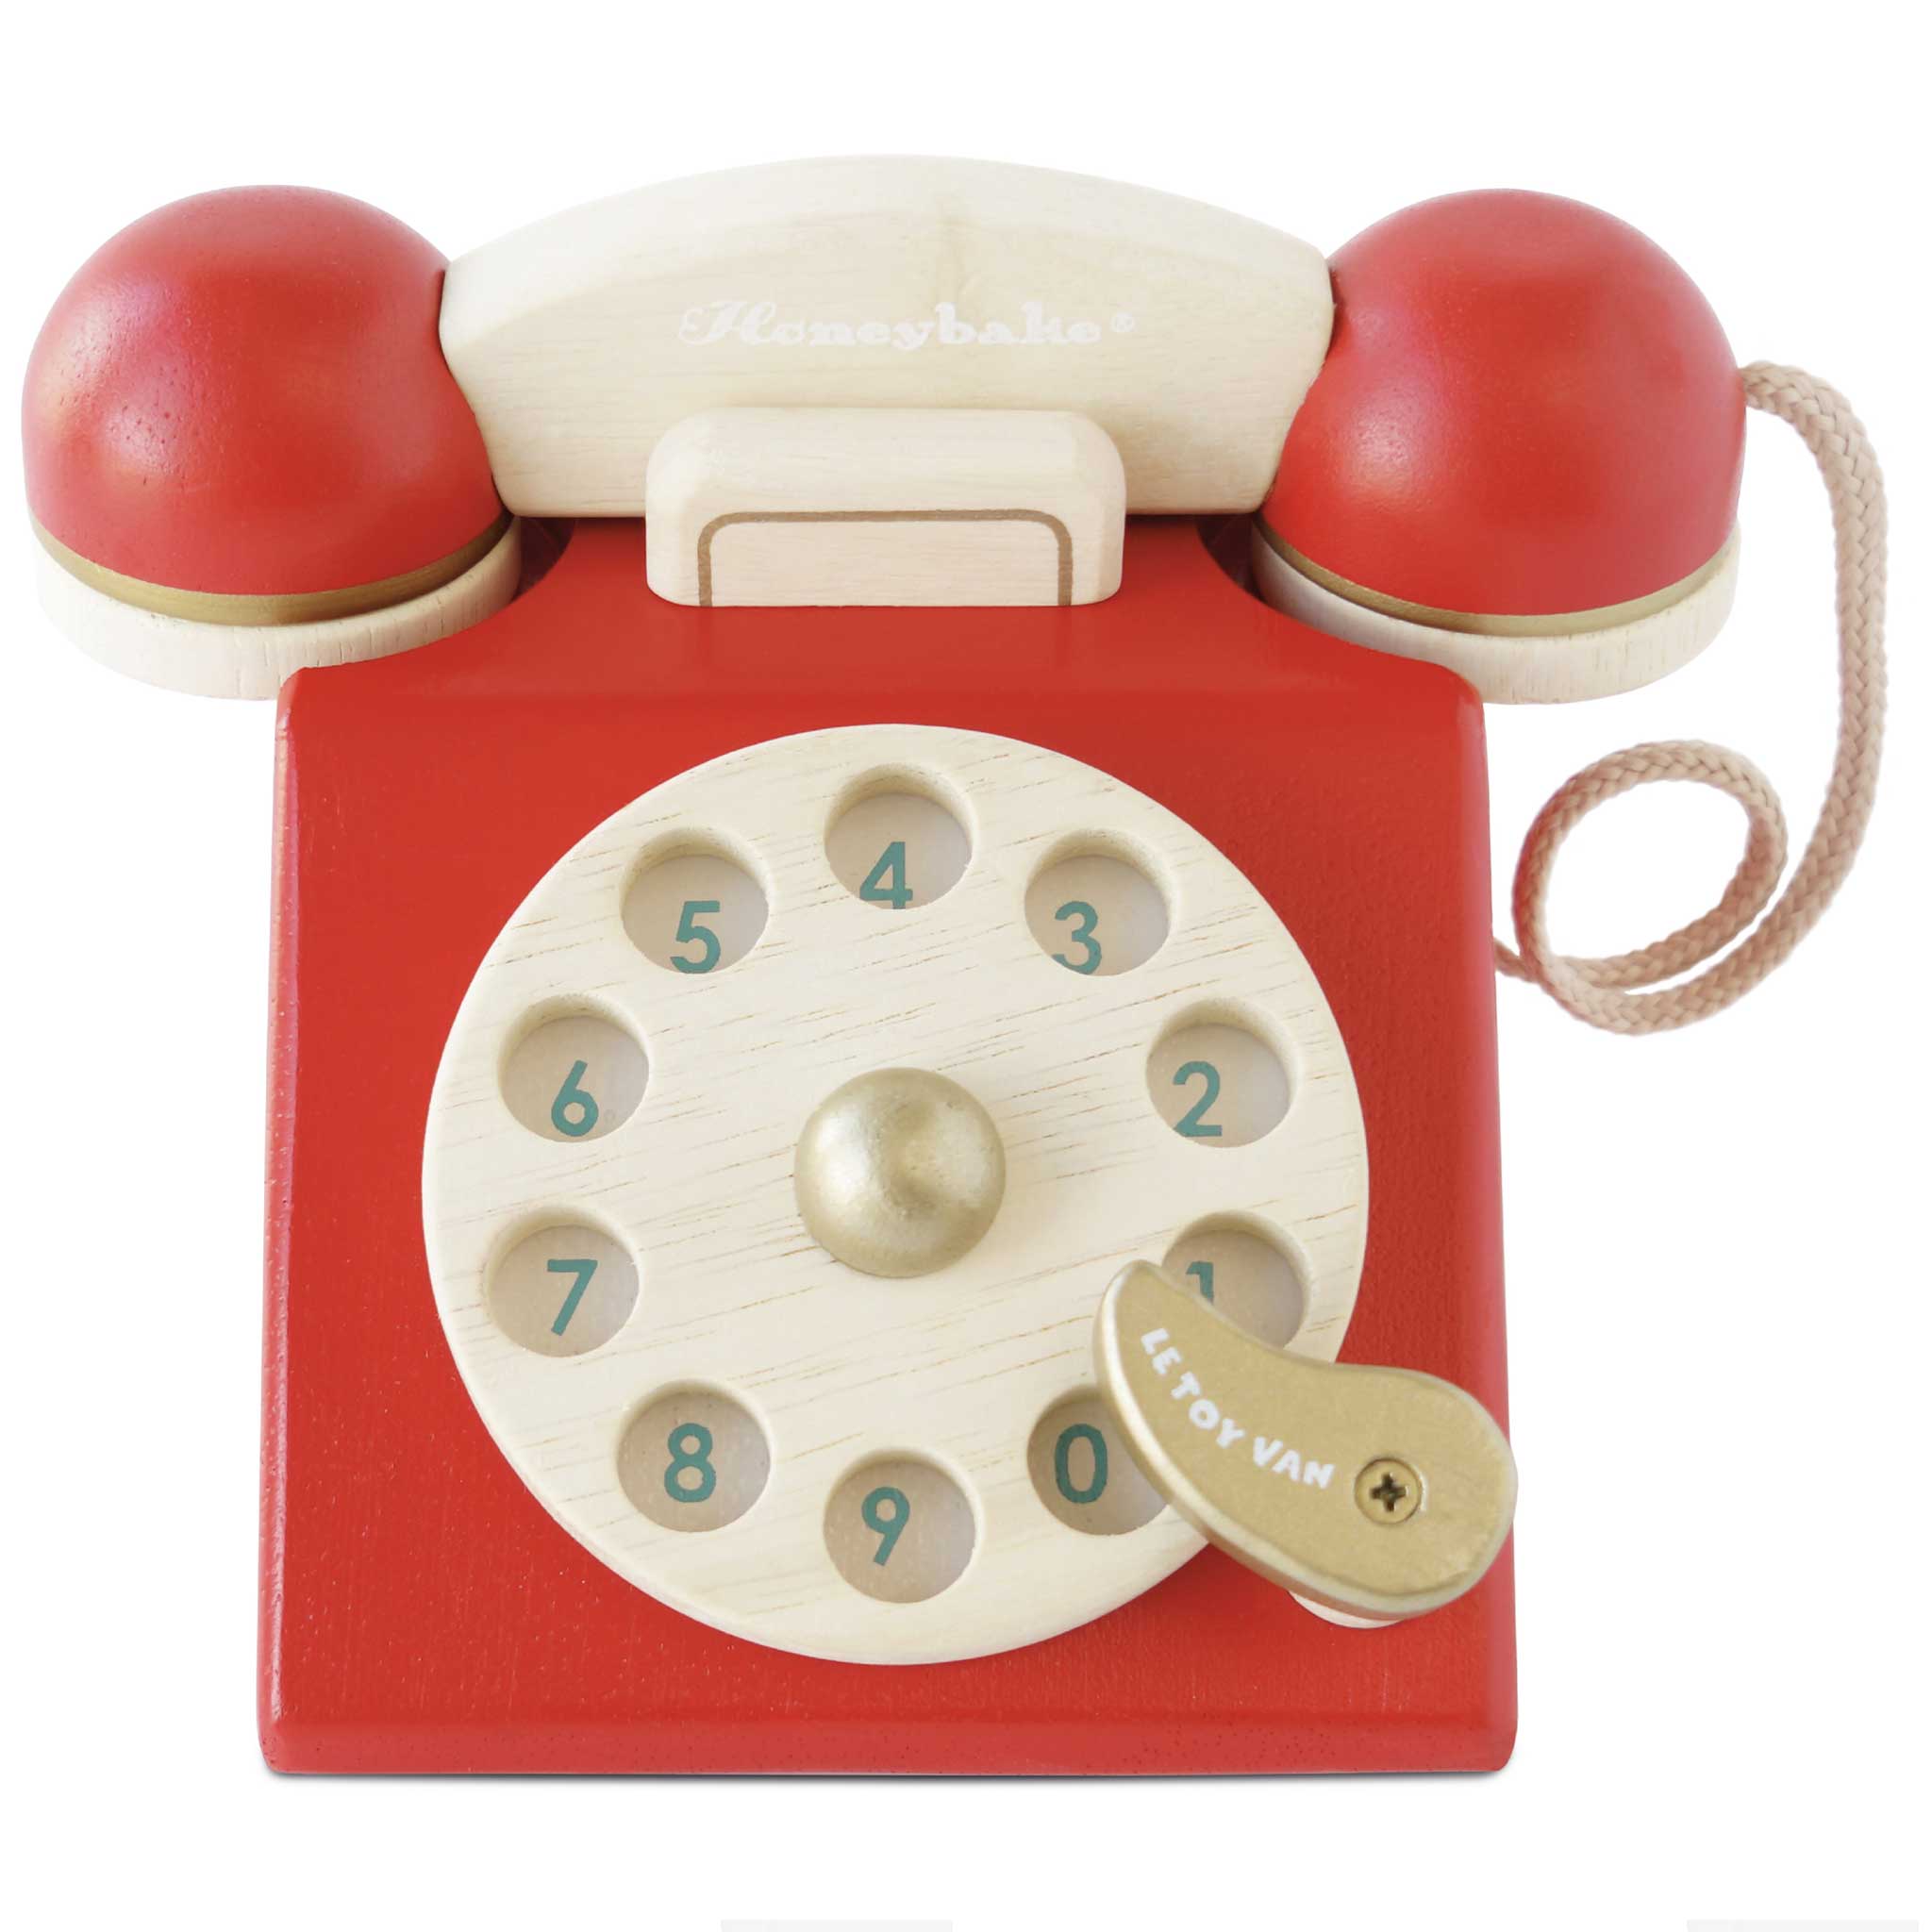 TV323-vintage-pretend-roleplay-phone-traditioanl-toy